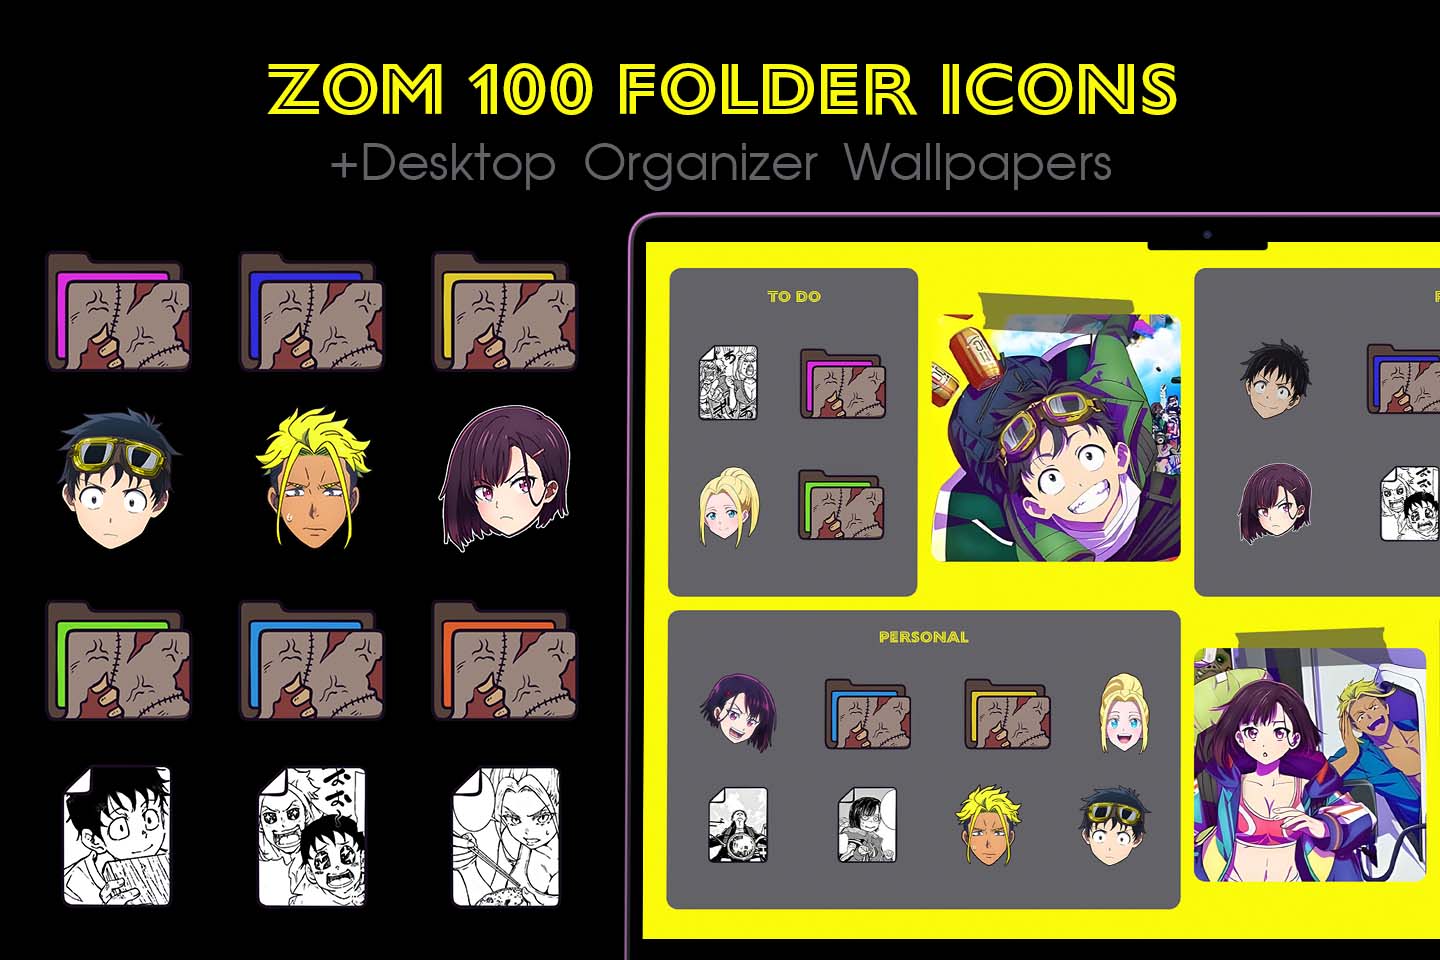 zom 100 folder icons pack